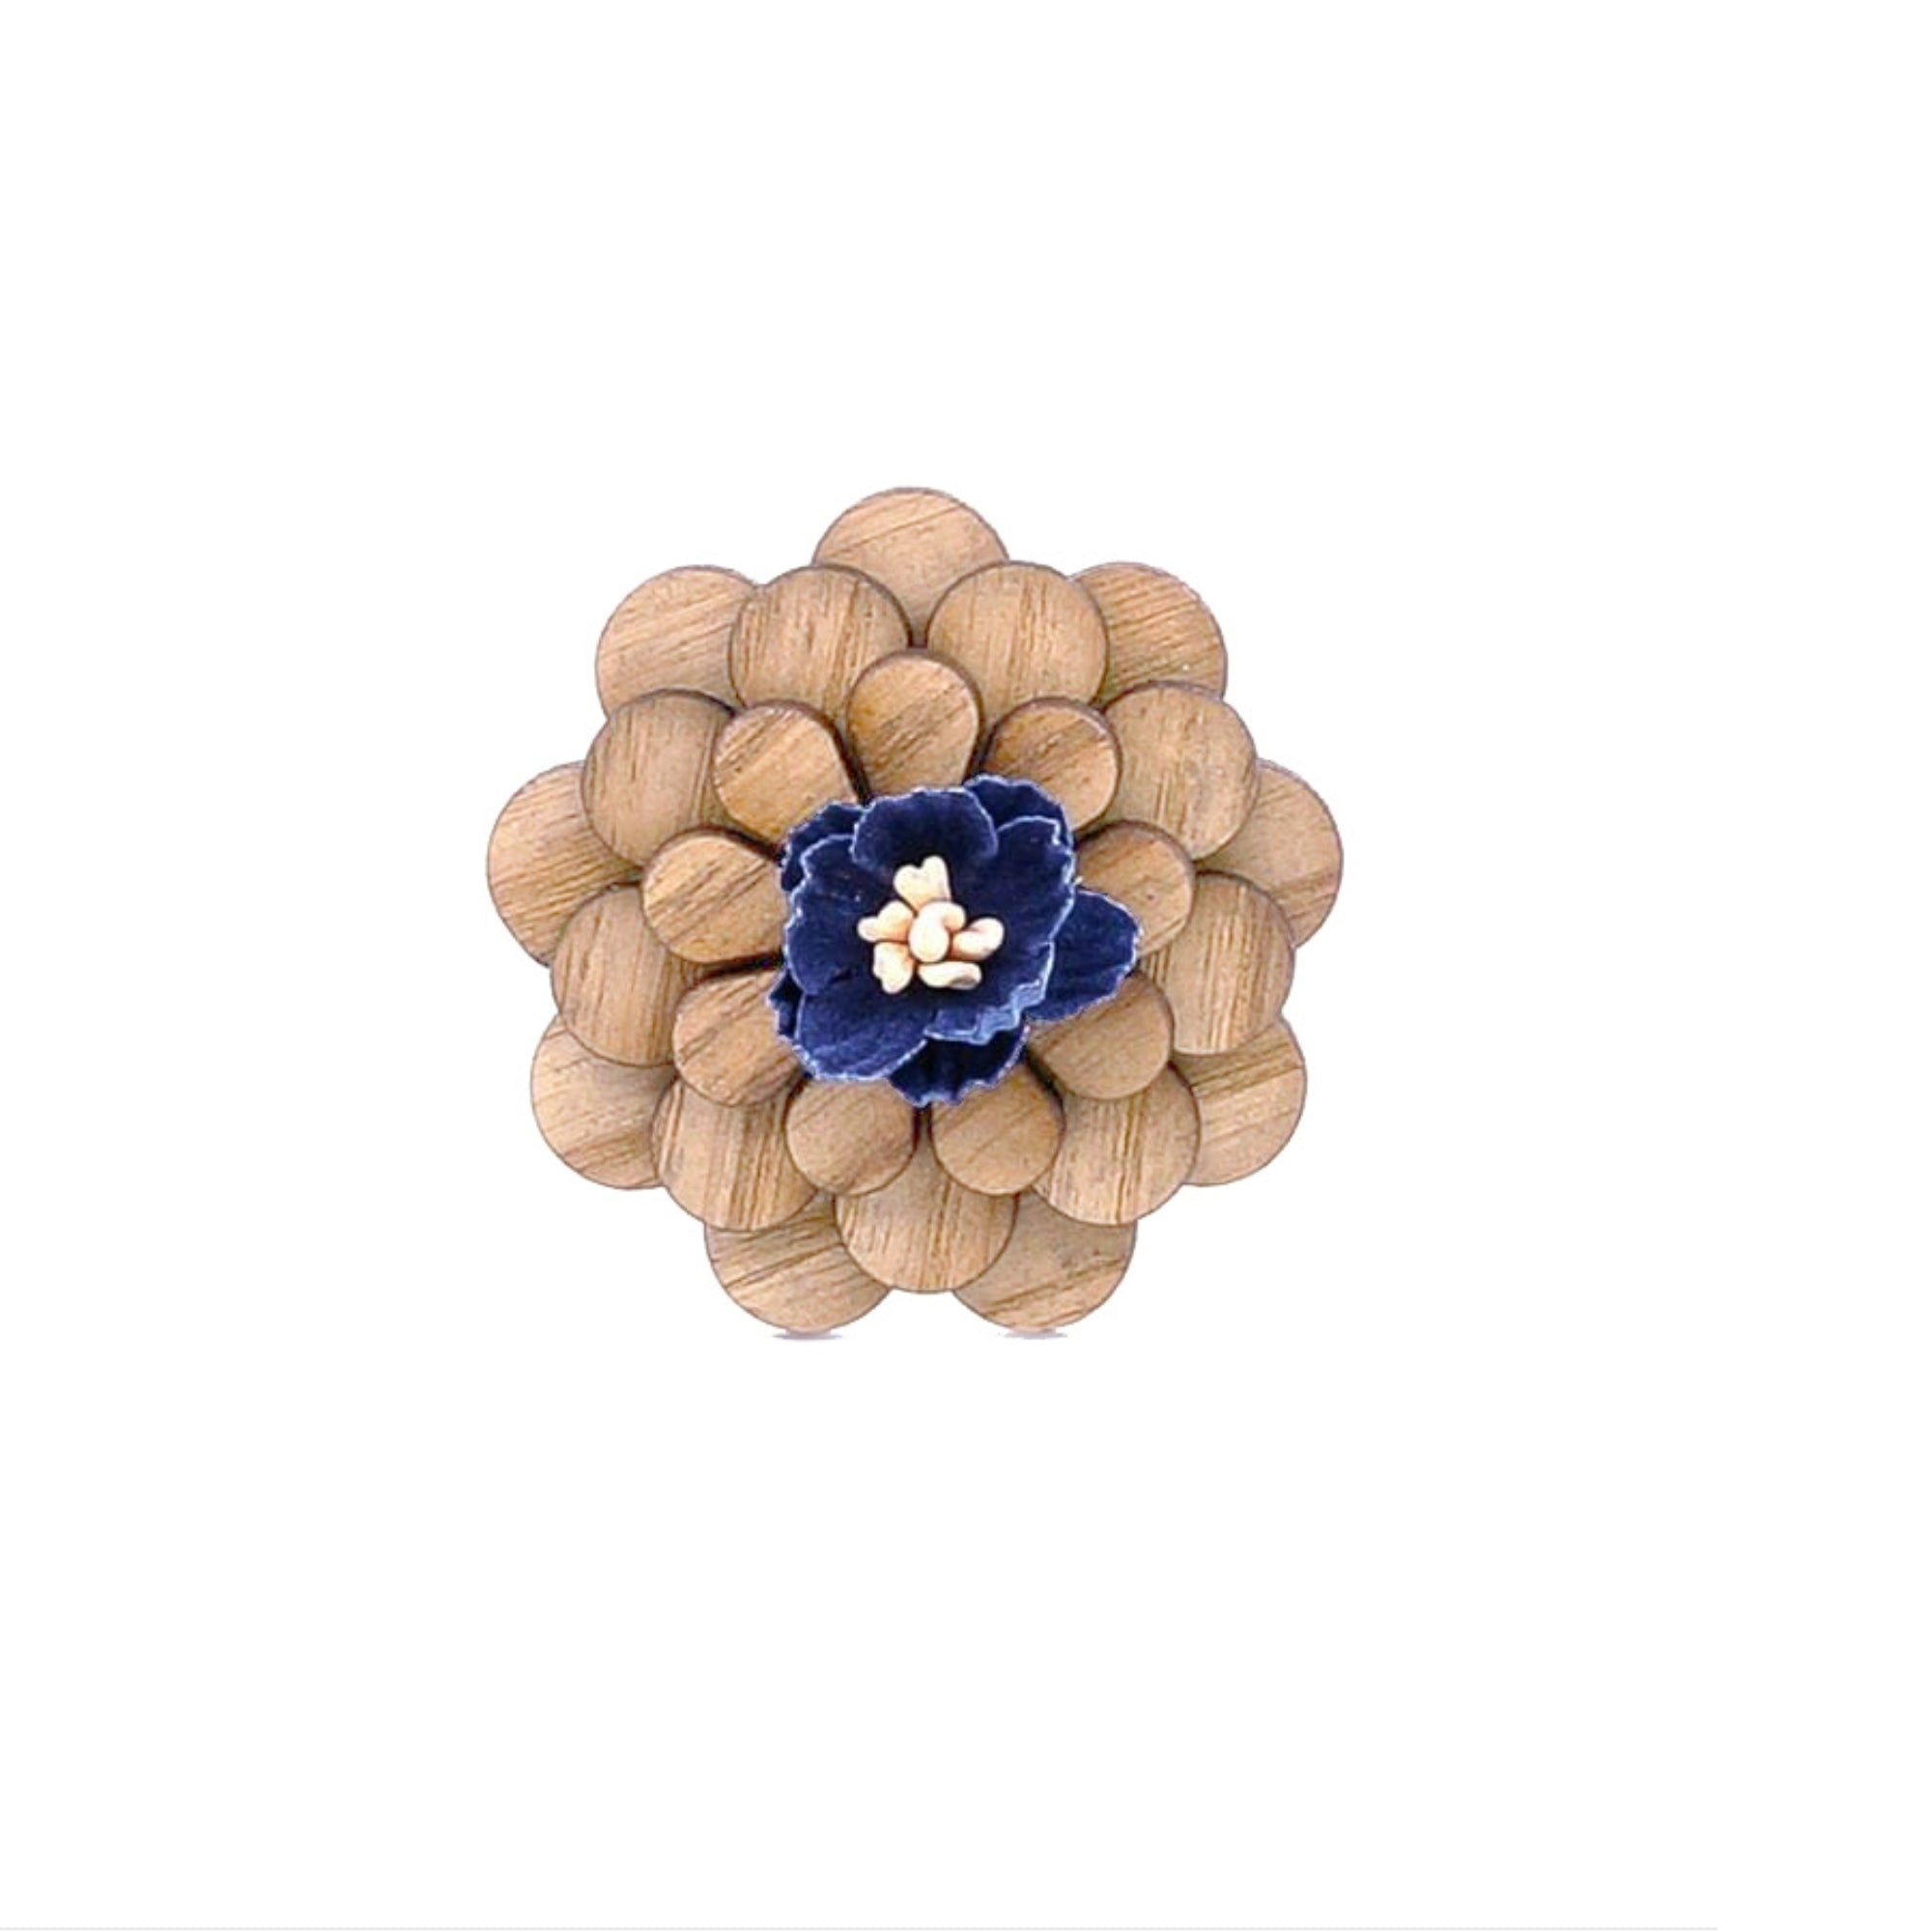 Wooden Blue Flower Lapel Pin